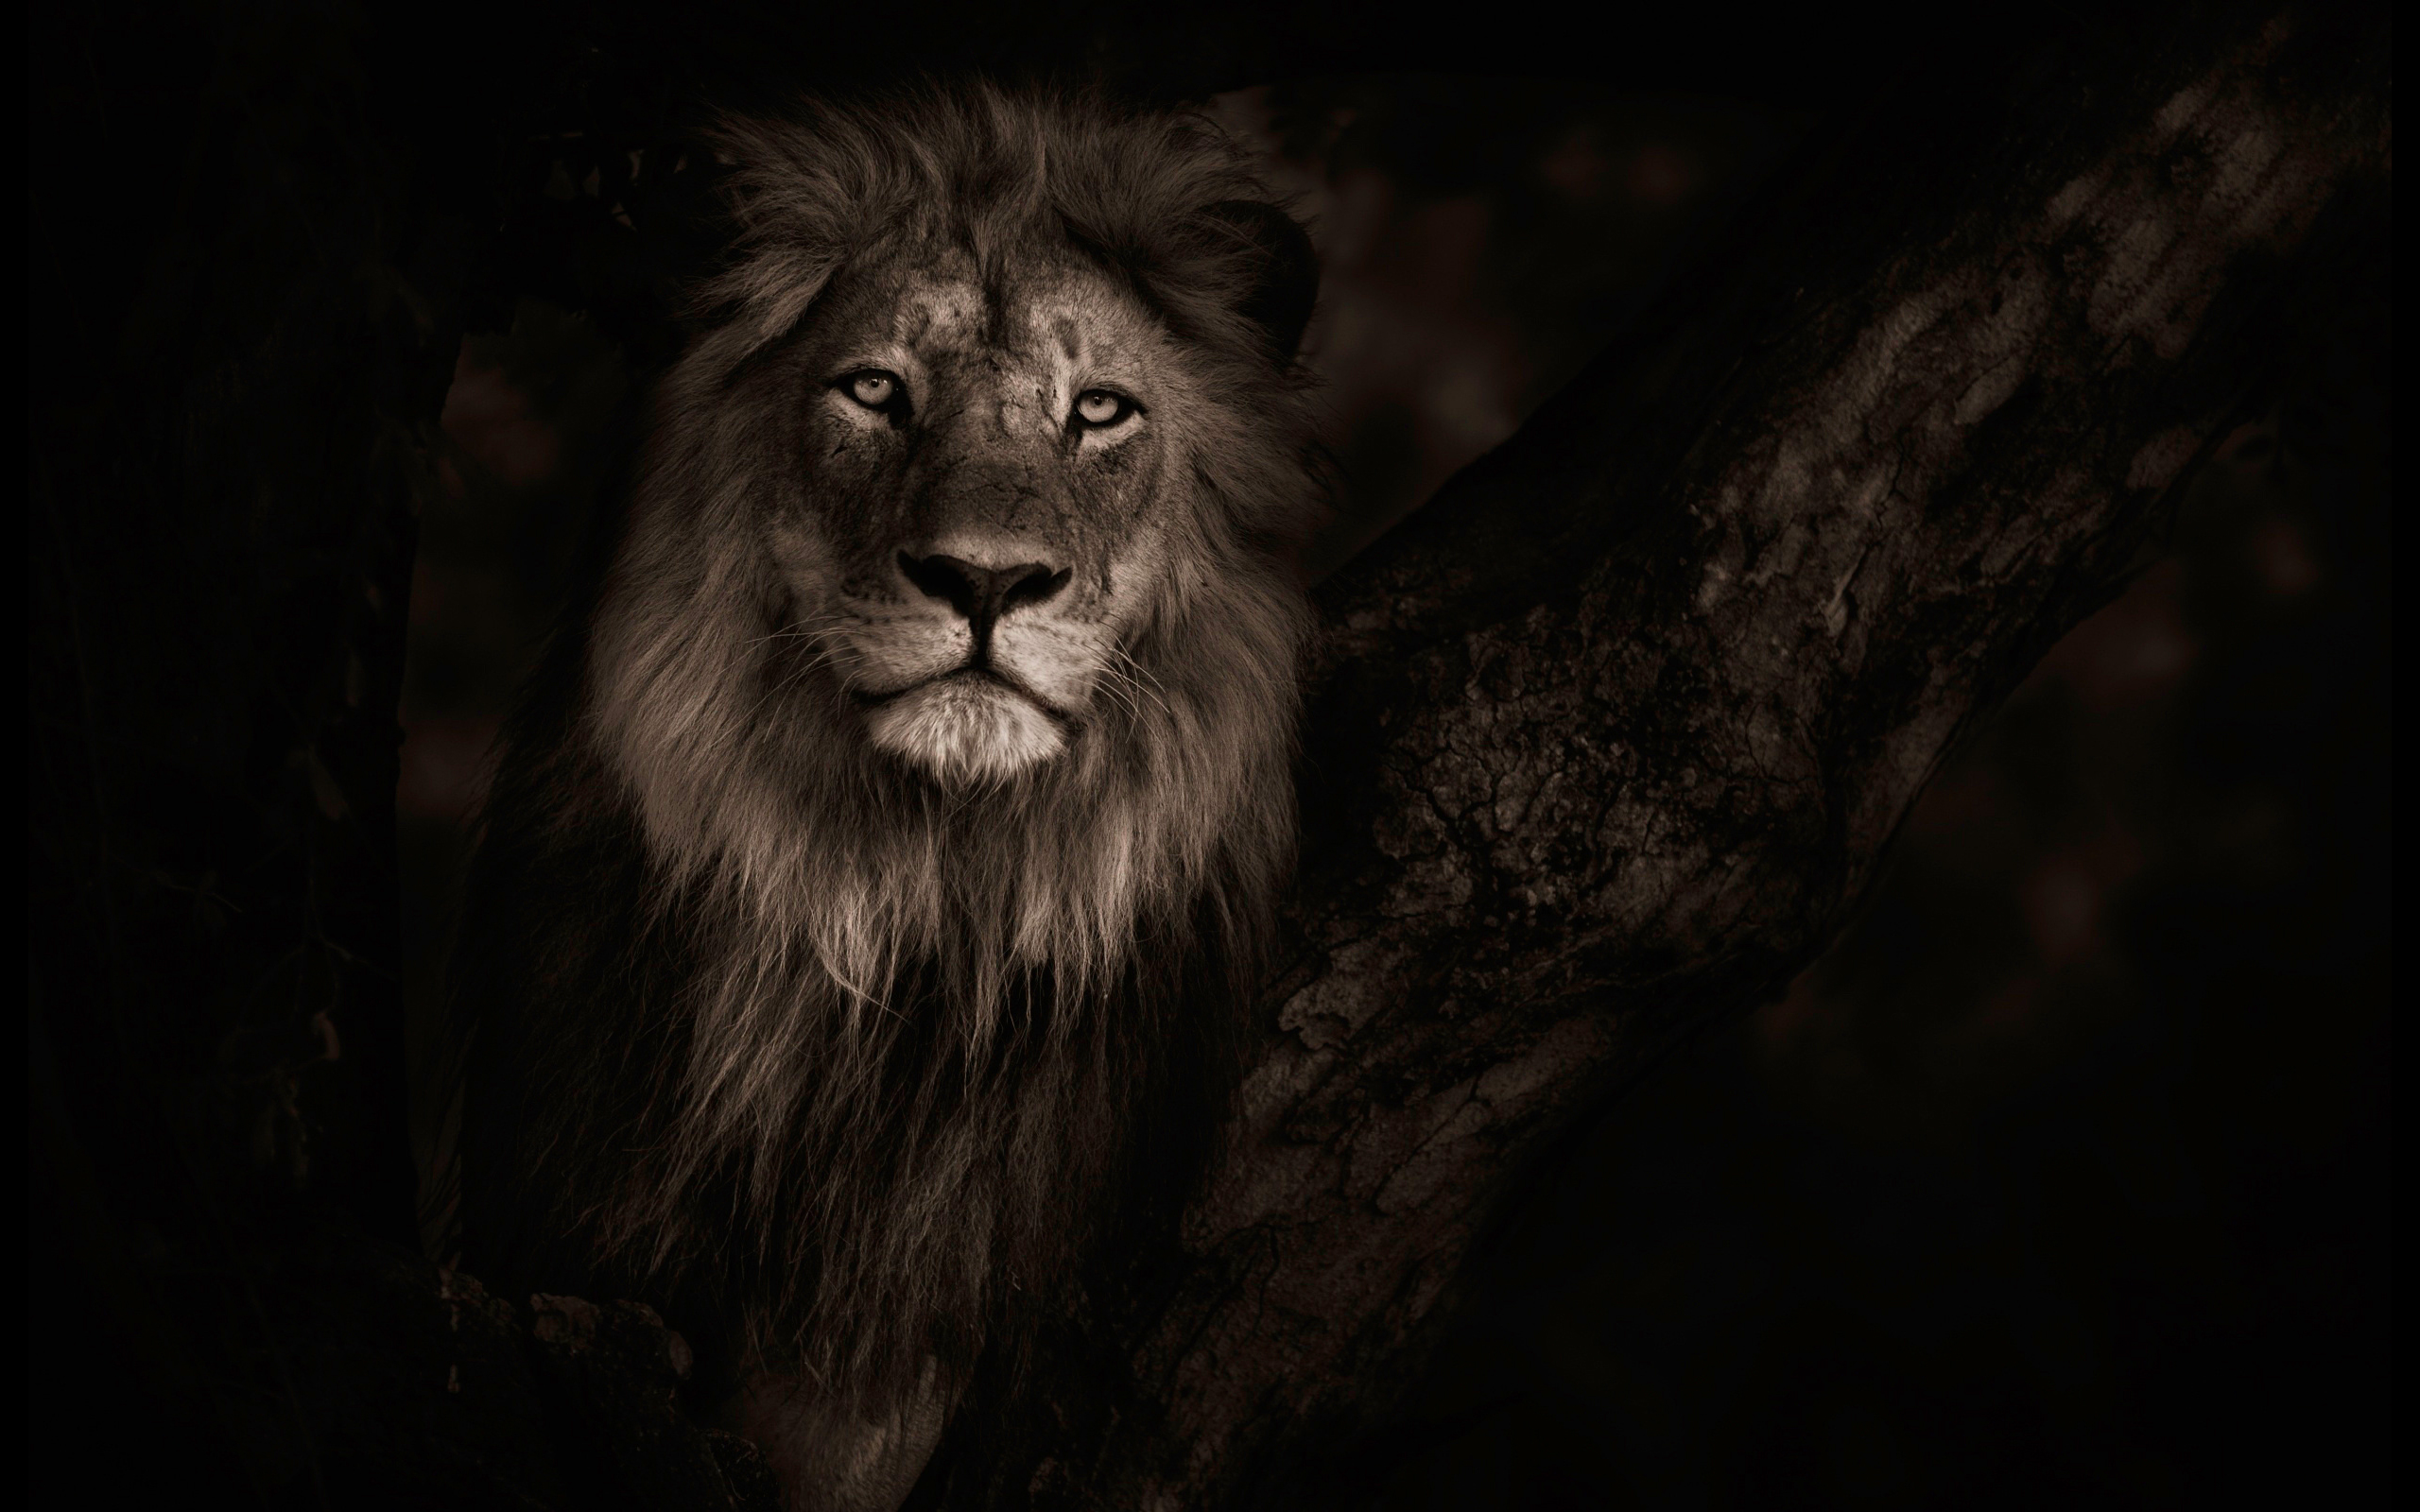 Wallpaper of lion